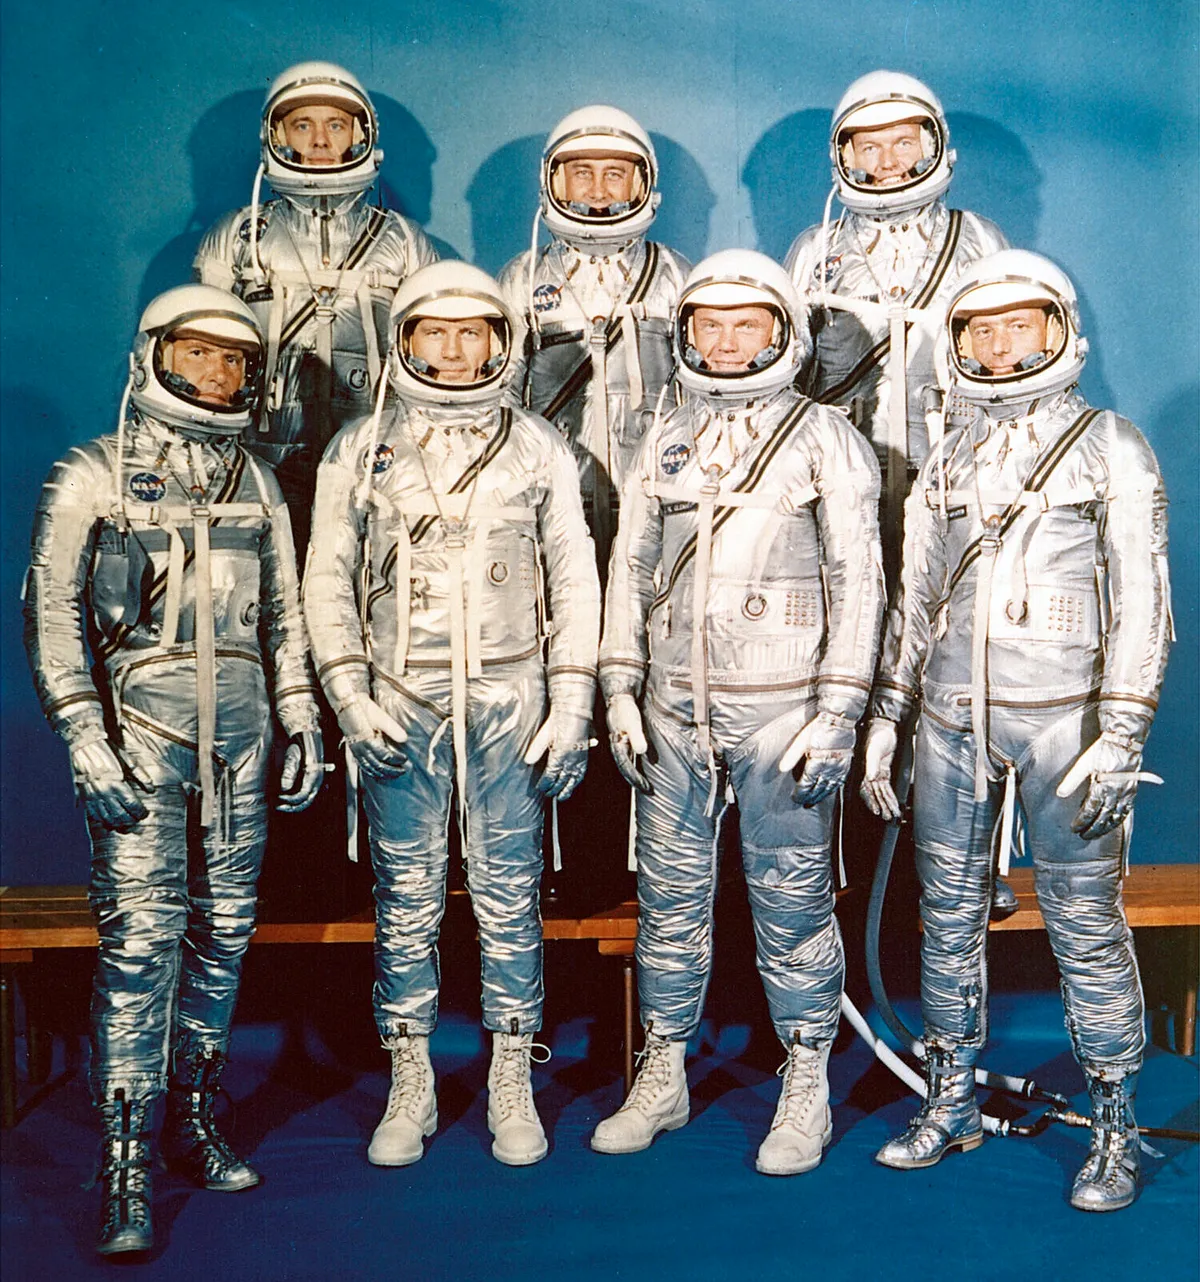 The seven Mercury astronauts were. From left: Wally Schirra, Alan Shepard, Deke Slayton, Gus Grissom, John Glenn, Gordon Cooper and Scott Carpenter. Credits: NASA